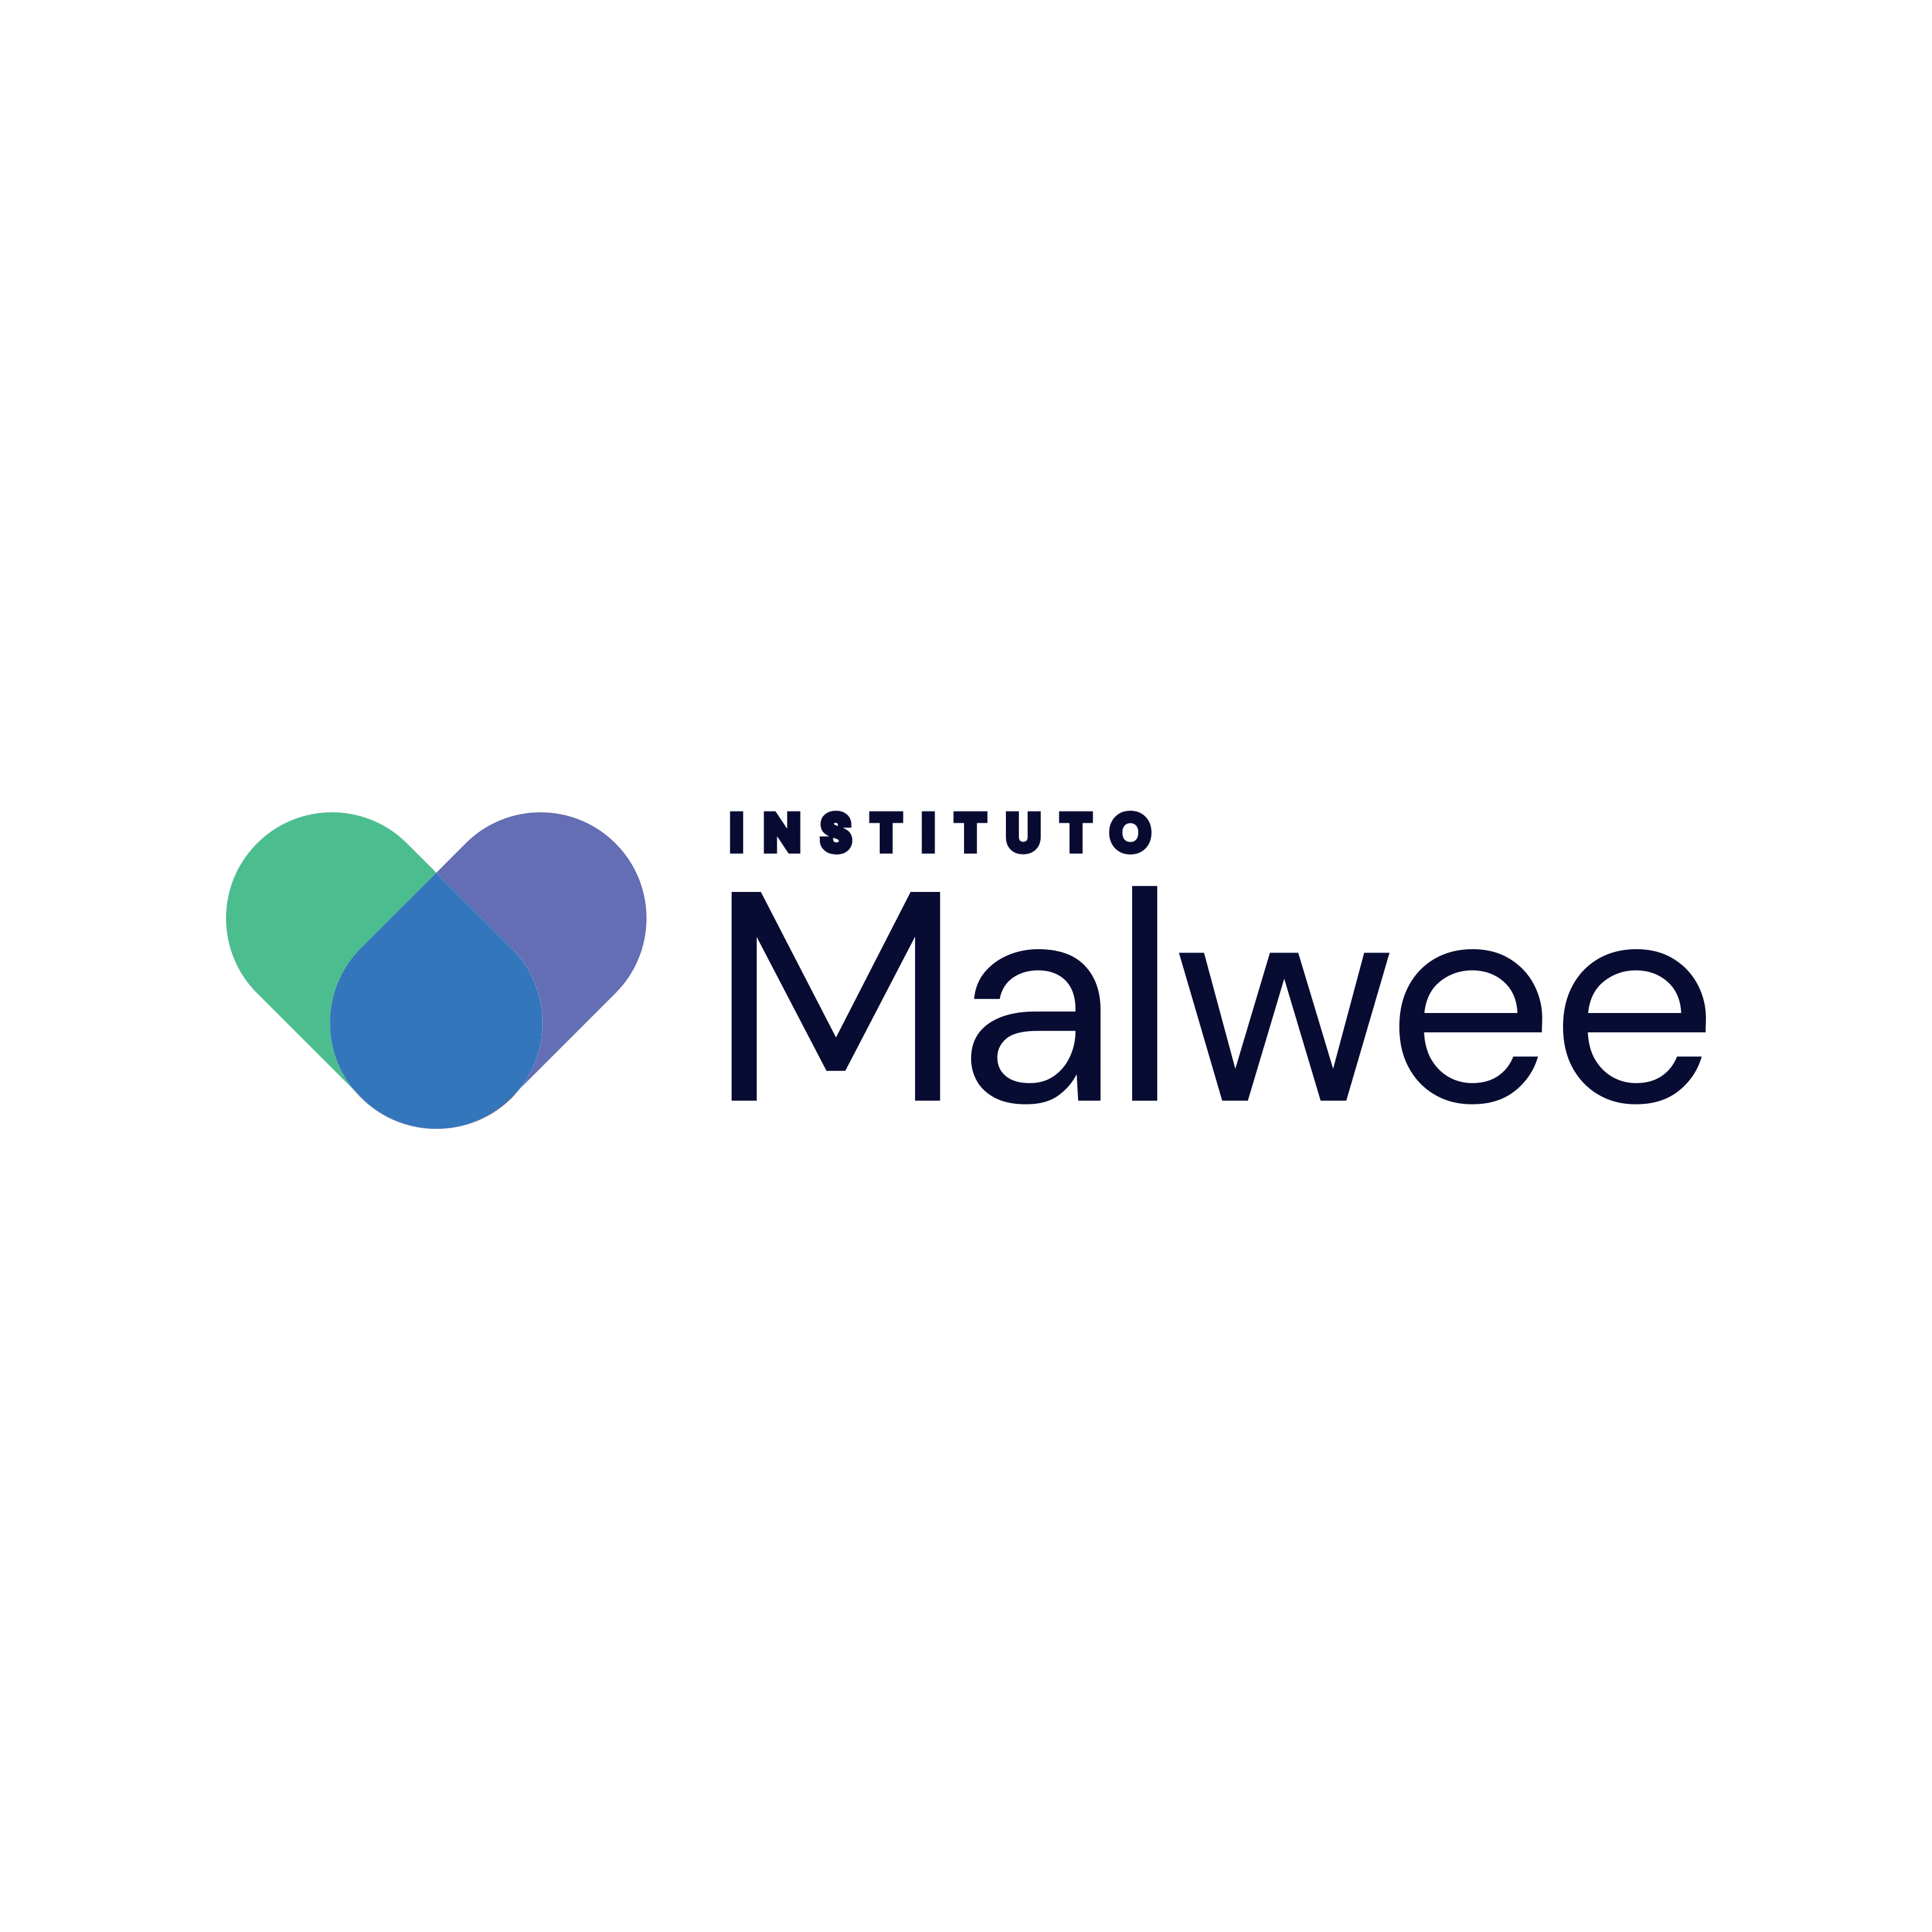 Malwee - LOGO-1